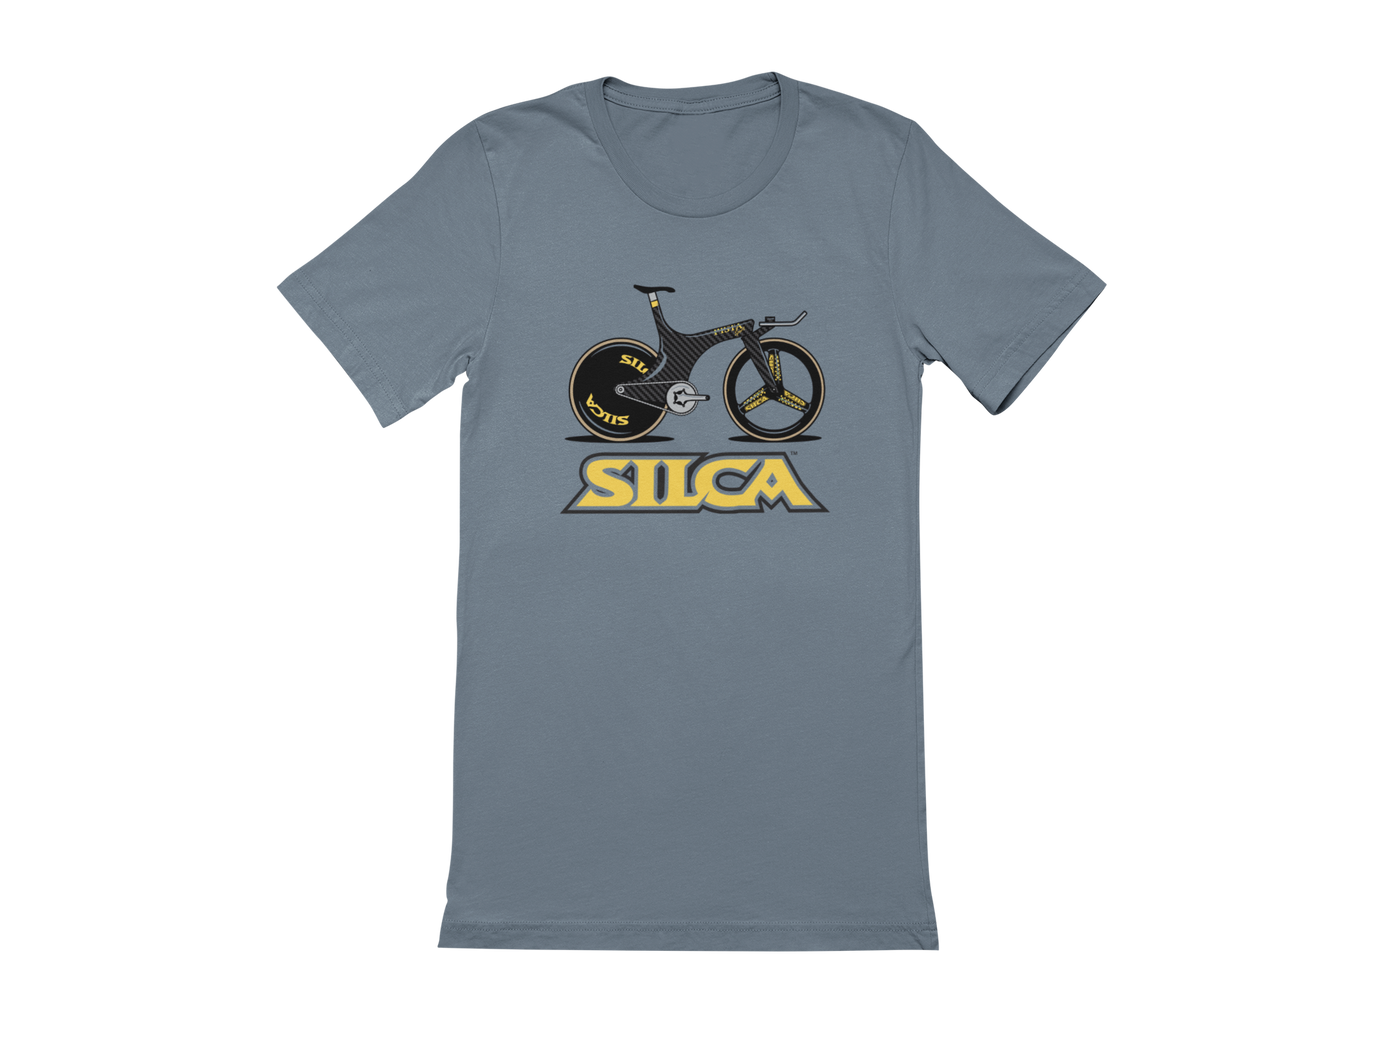 Silca Pista Hour record inspired shirt | Bike t shirt | Silca T shirt | simple t-shirt